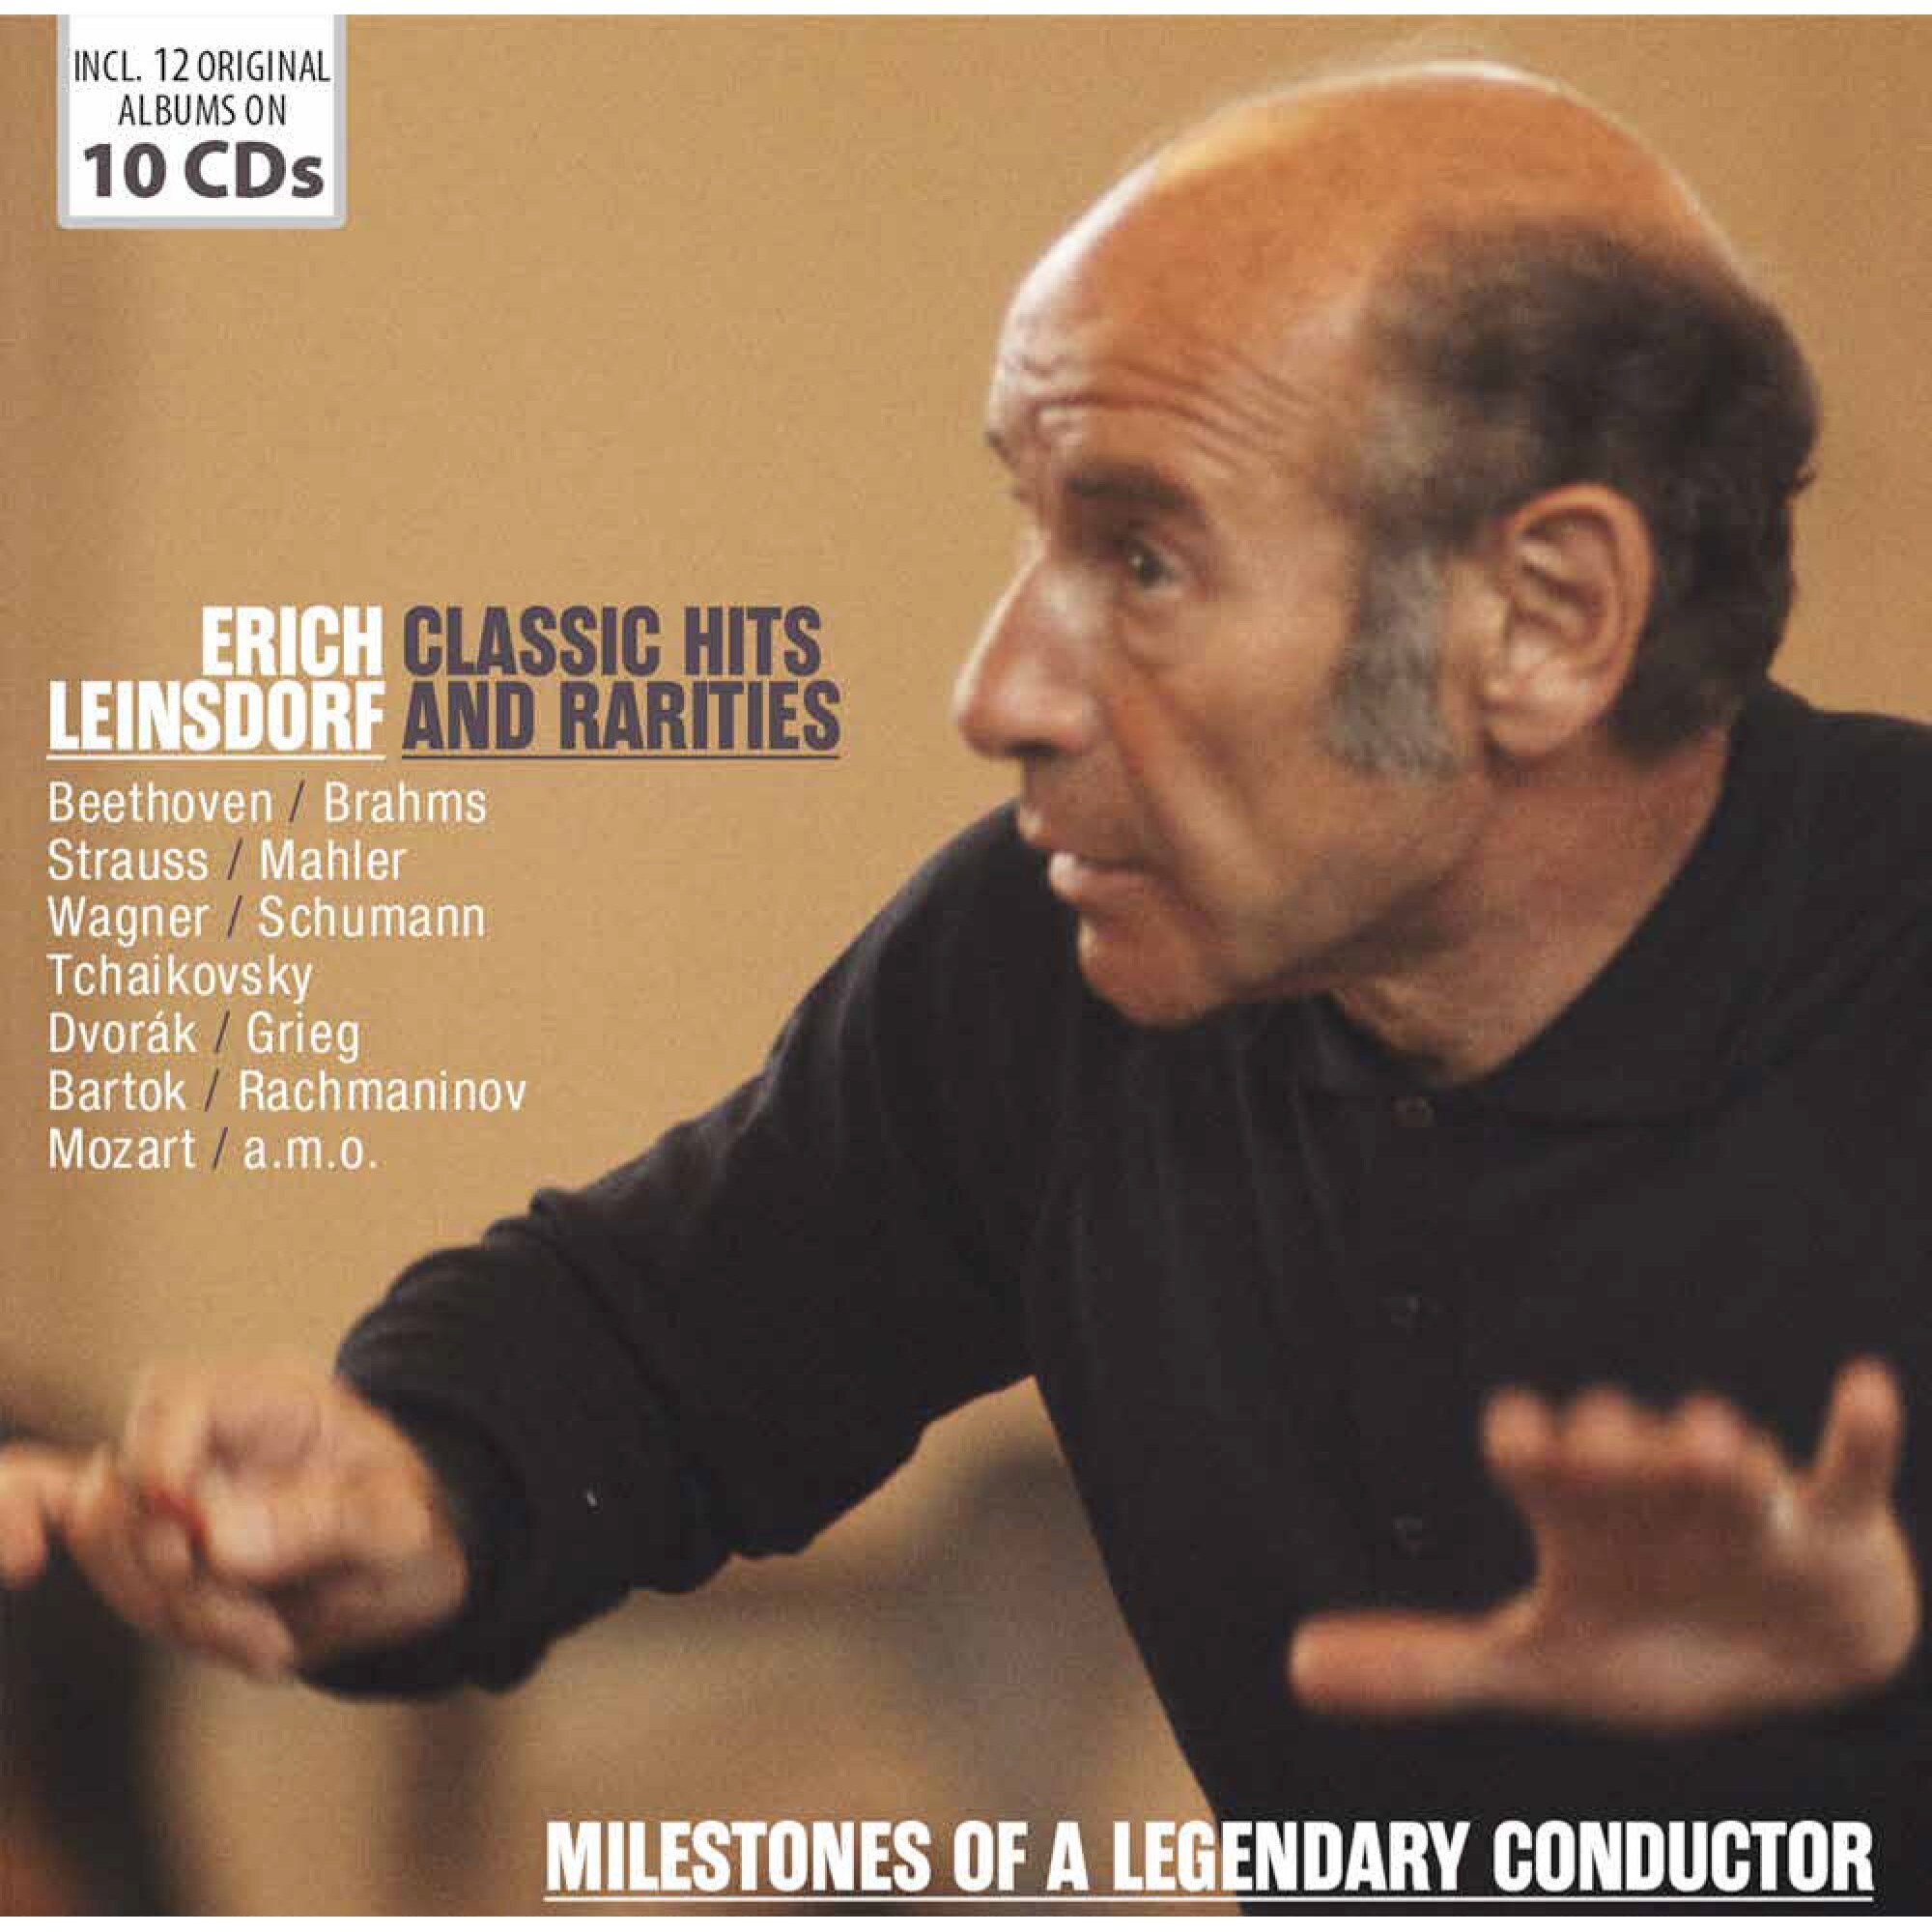 Conductor　Milestones　Erich　of　Legendary　Leinsdorf　a　(10CD)